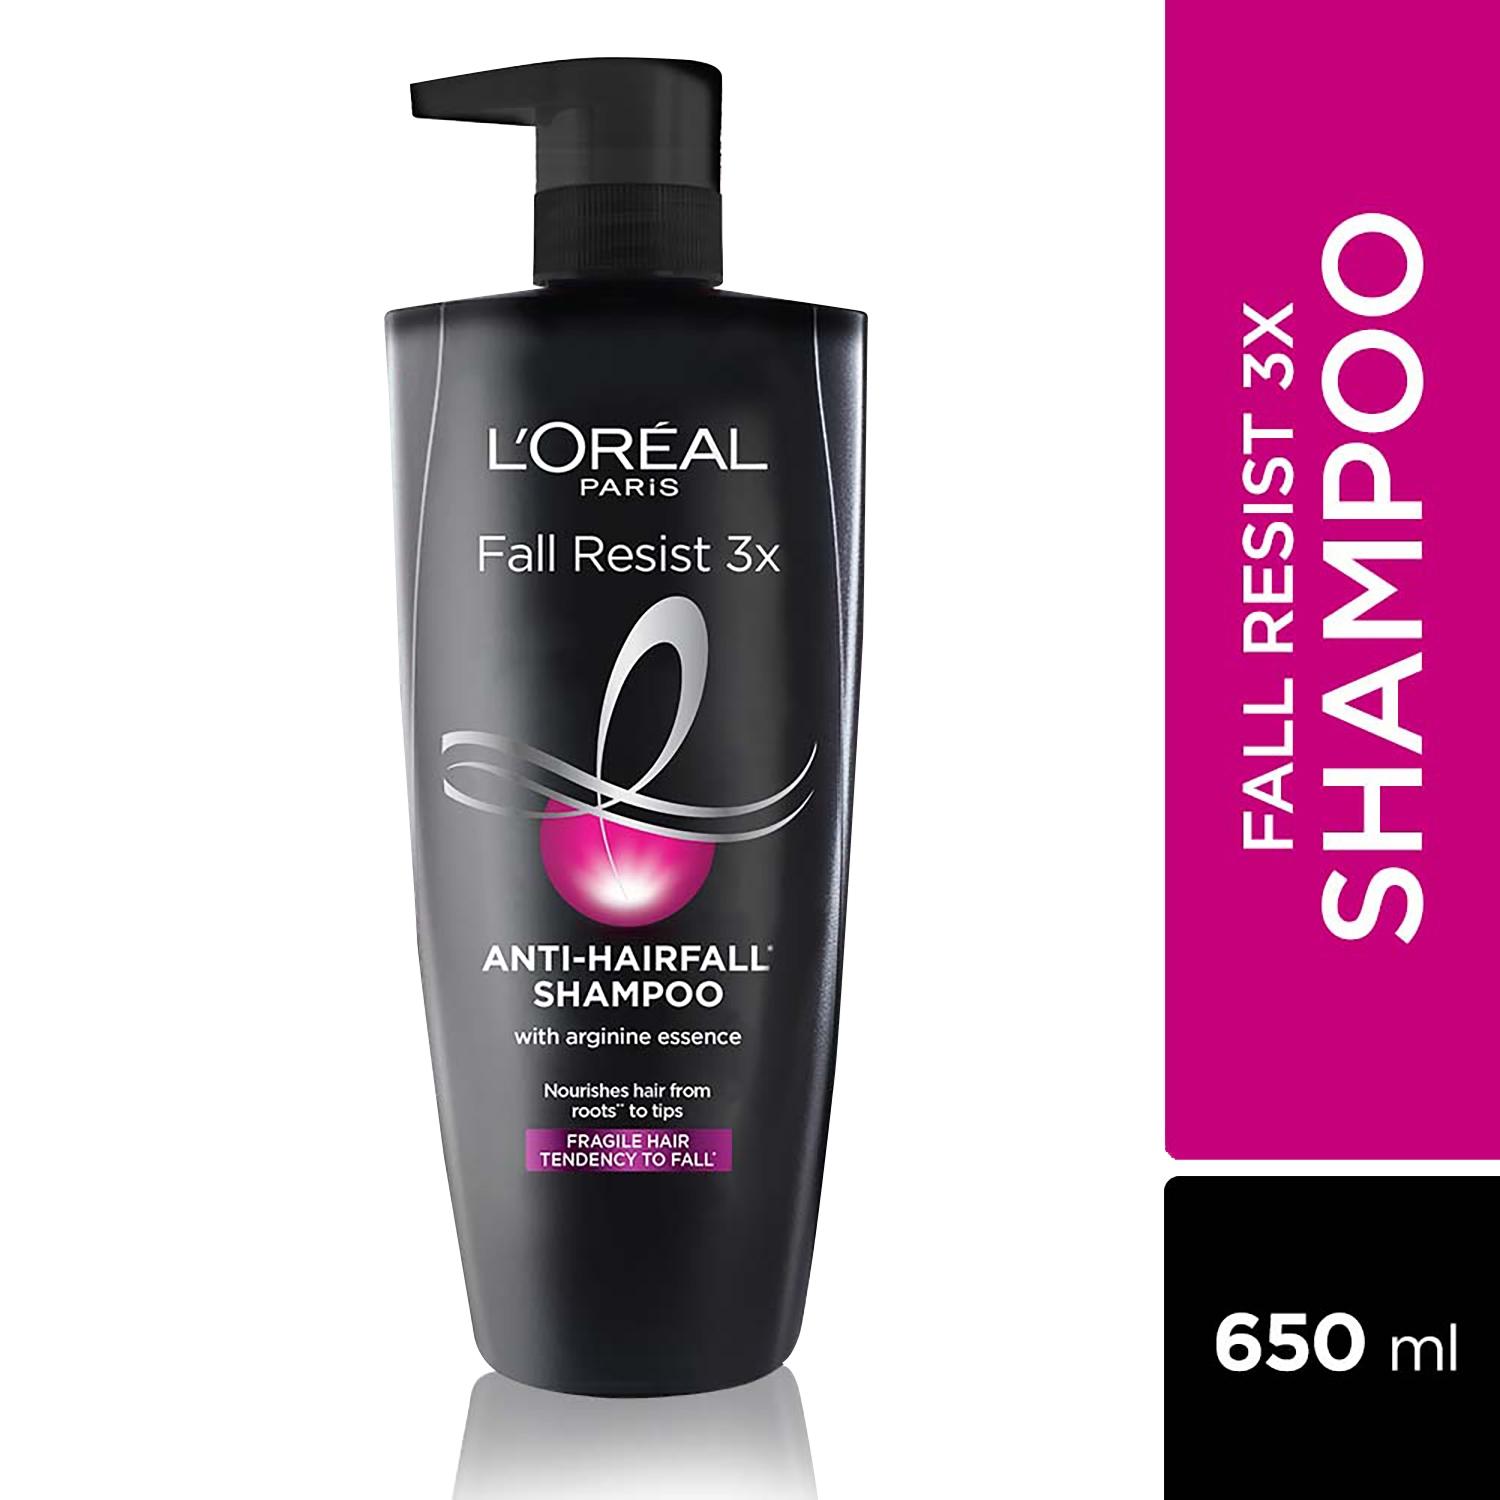 l'oreal-paris-fall-resist-3x-anti-hairfall-shampoo-(650ml)